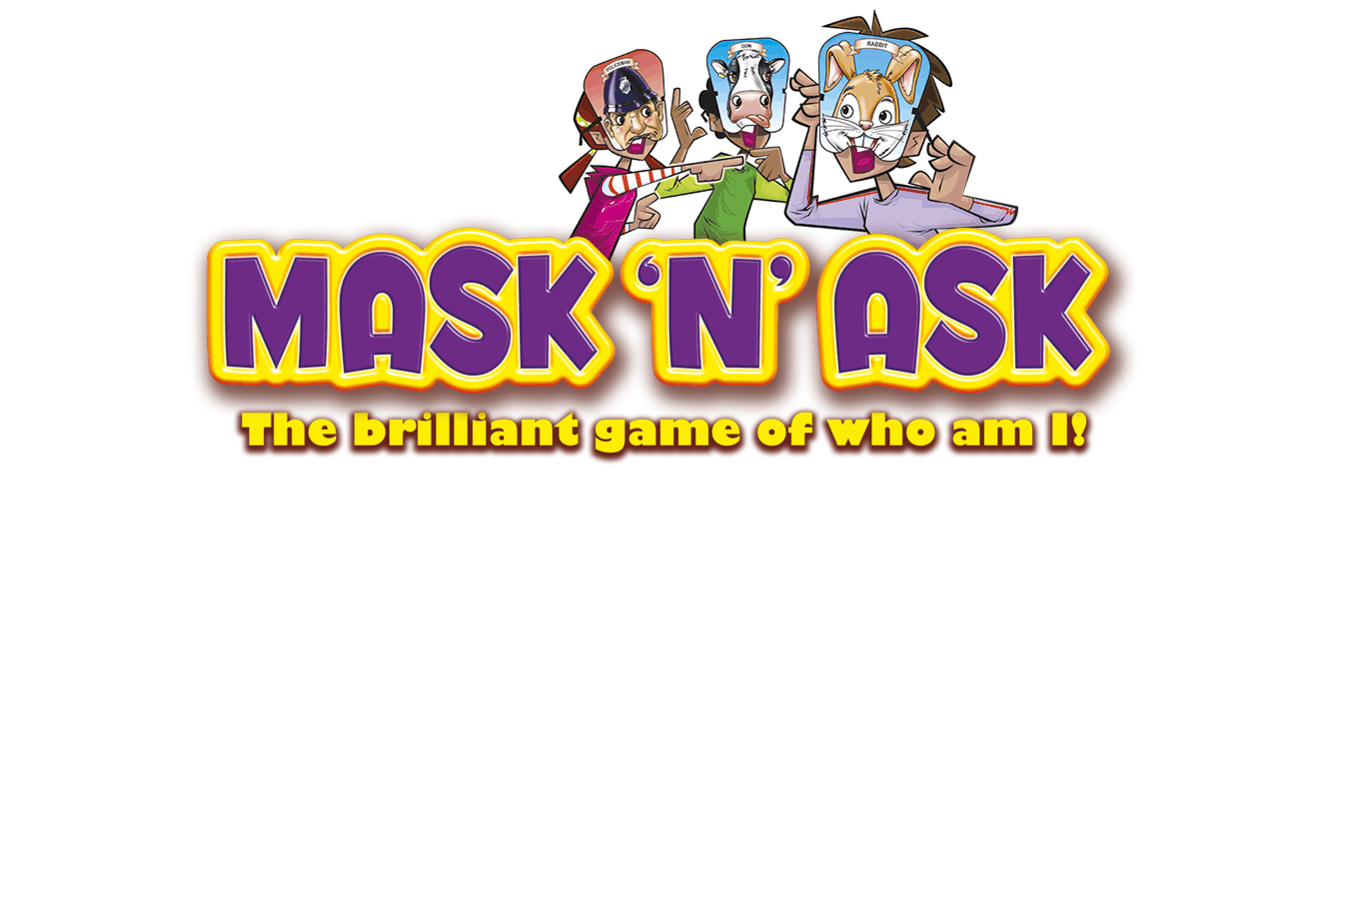 Mask 'n' Ask